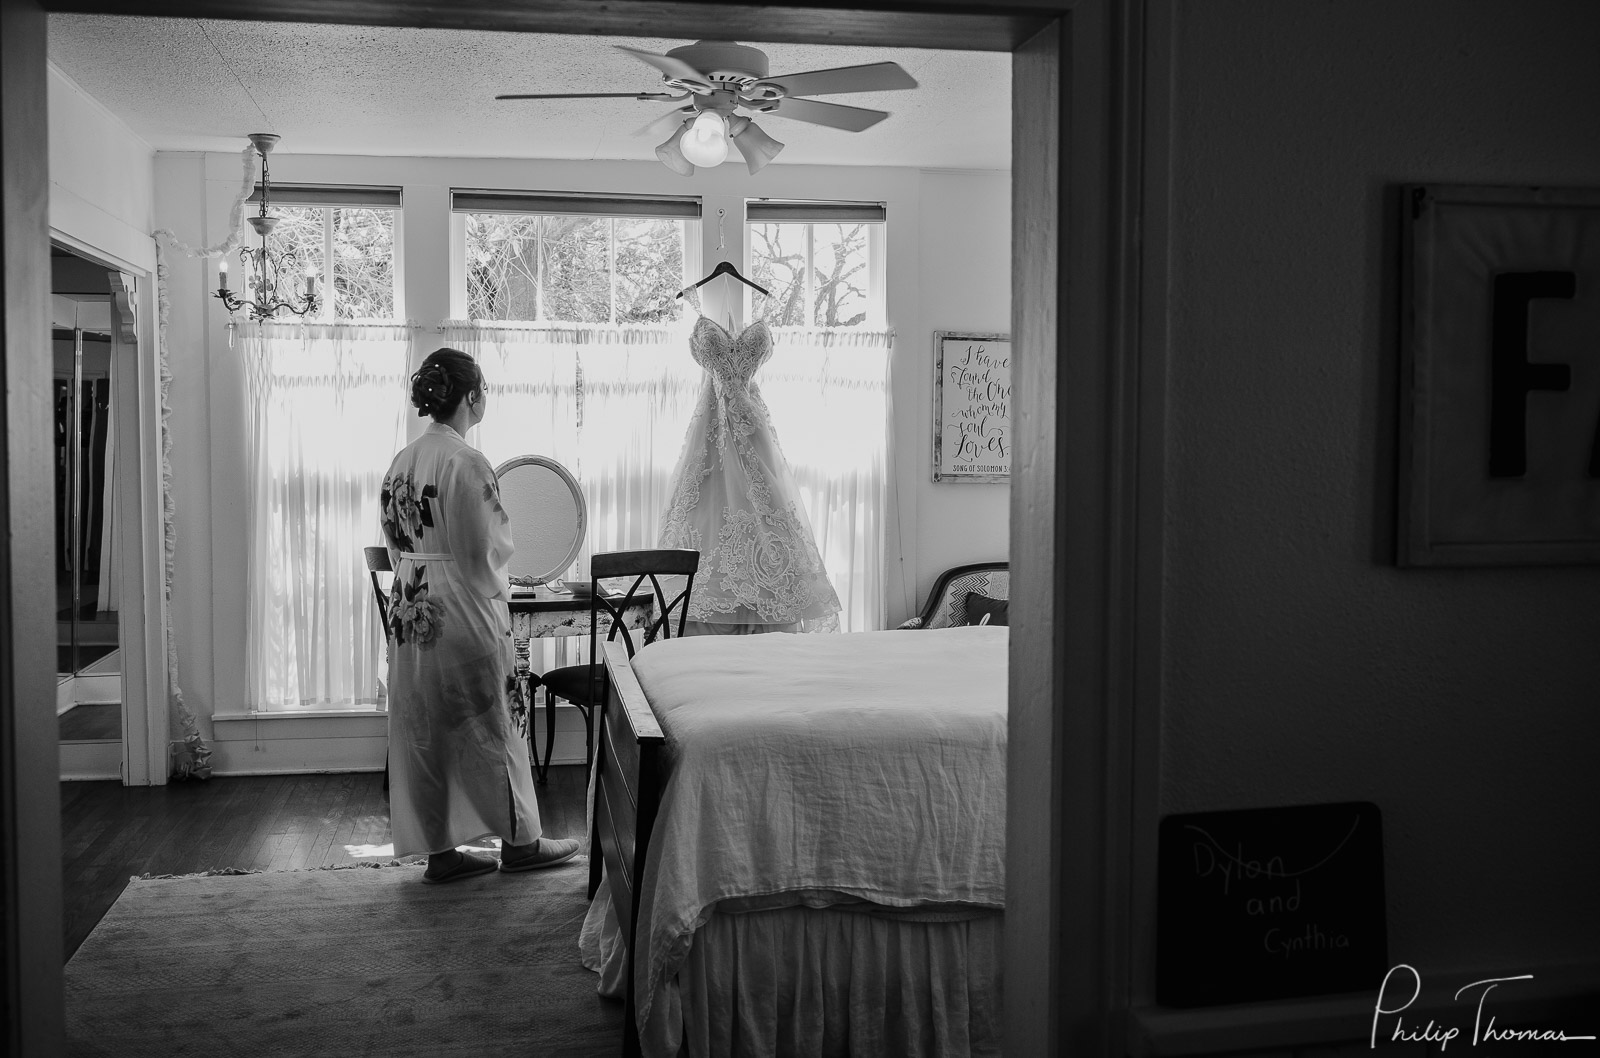 14 Gruene Estate Event Venue Wedding Ceremony Leica photographer Philip Thomas Photography